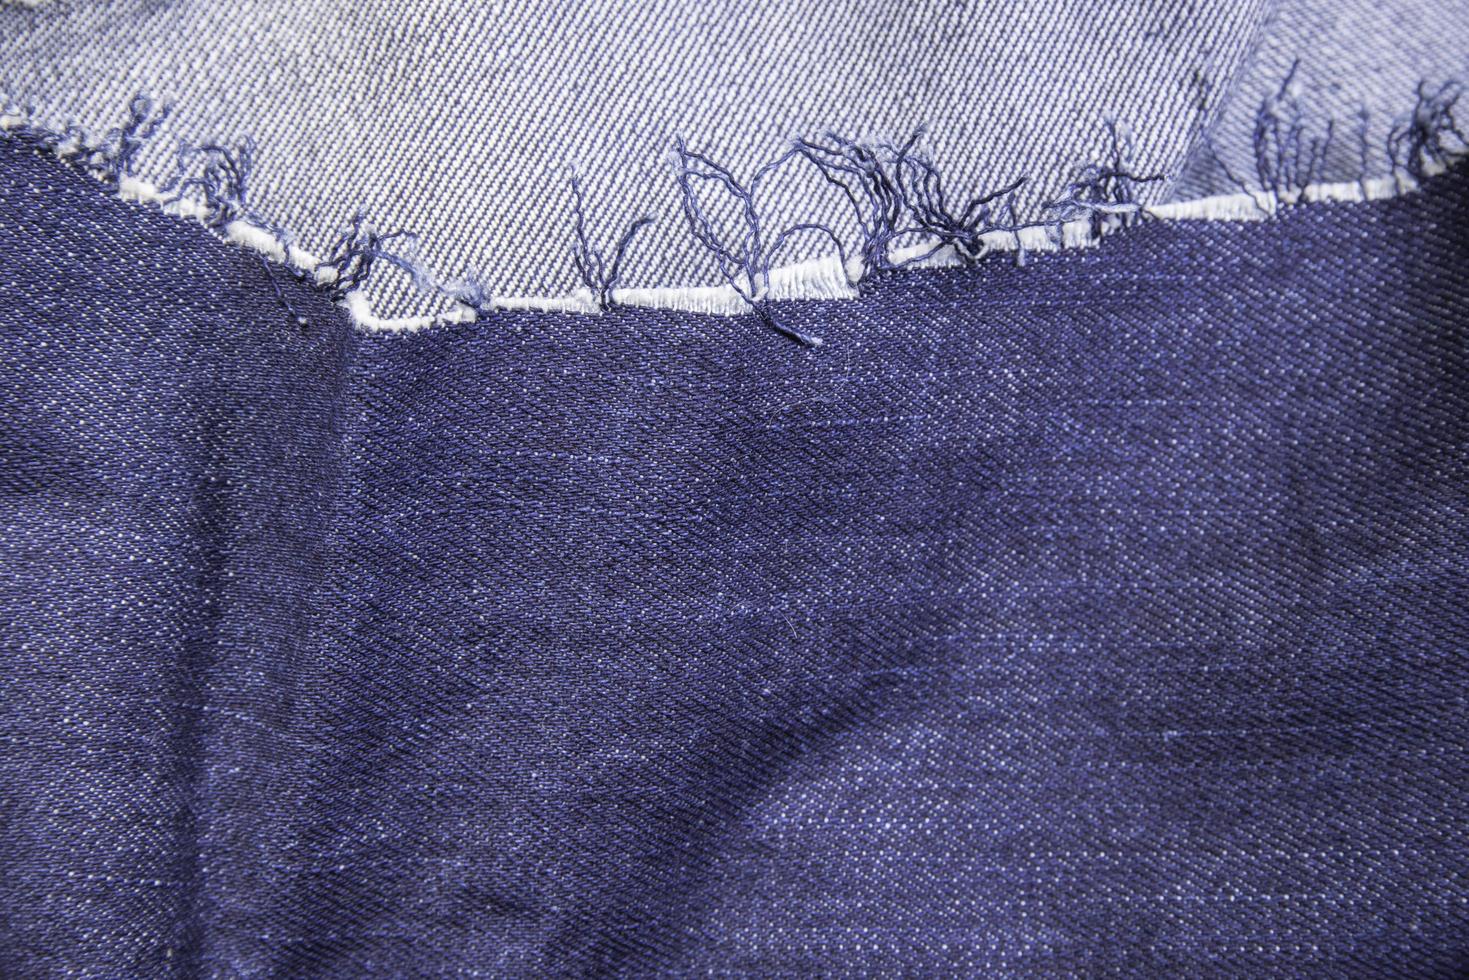 Texture of blue denim jean, background photo